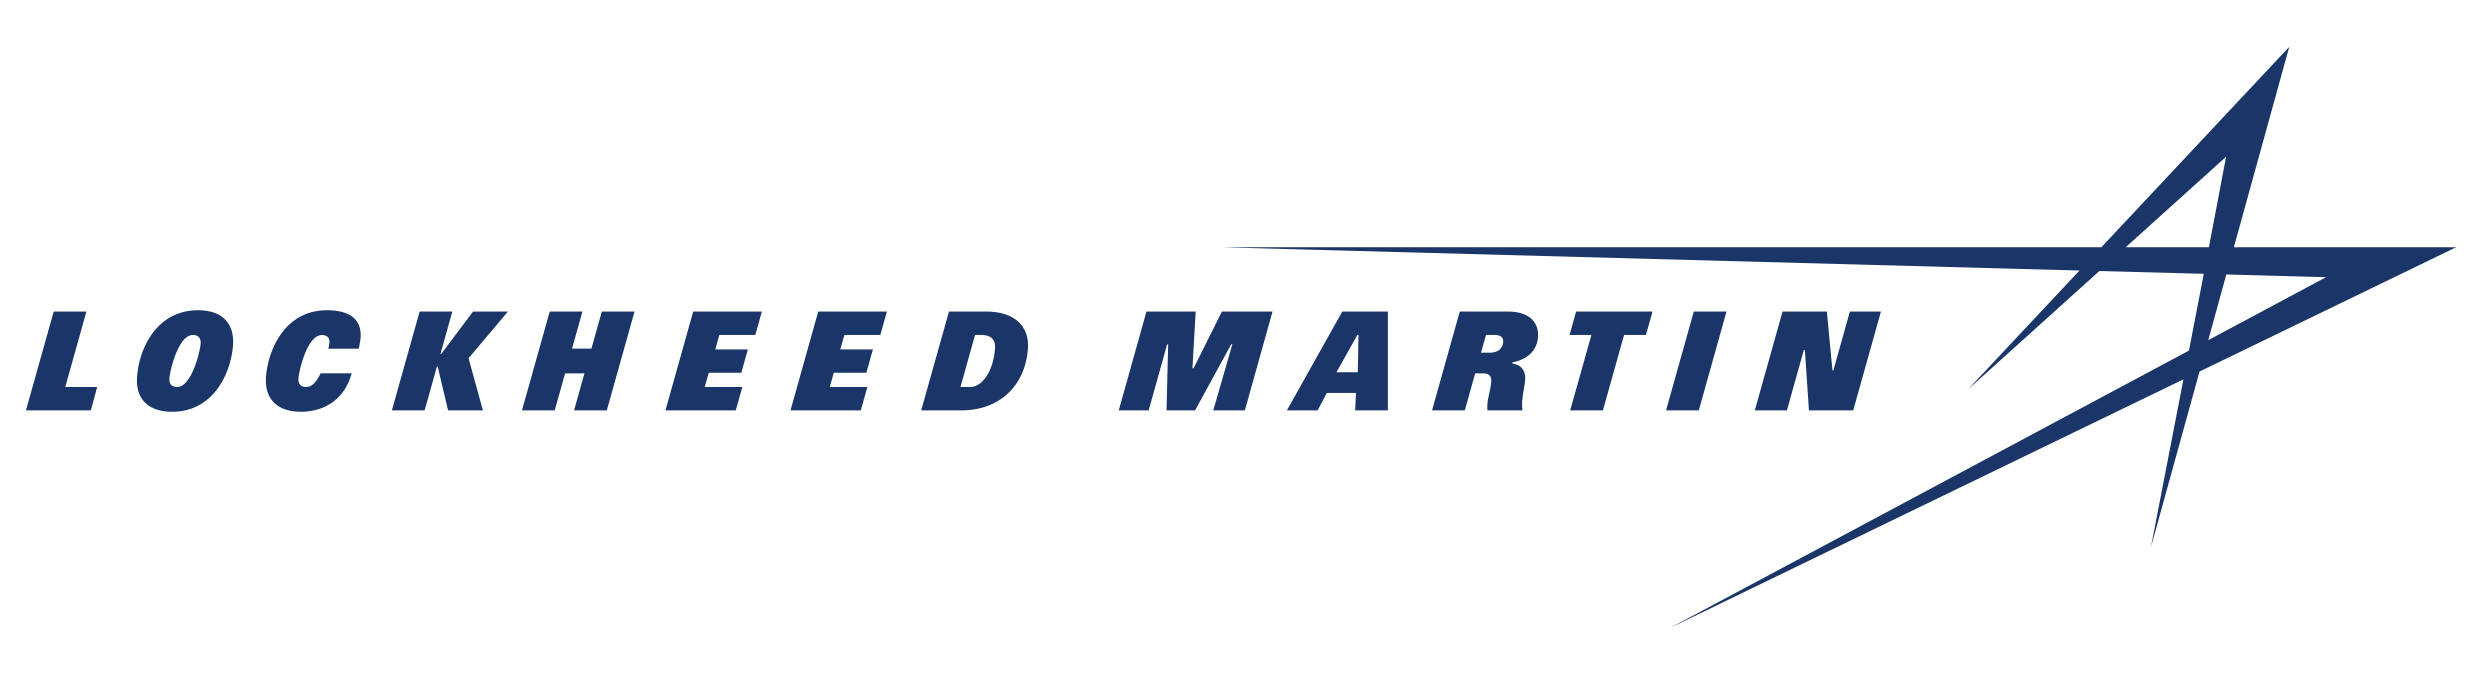 Empower Leadership Clients - Lockheed Martin